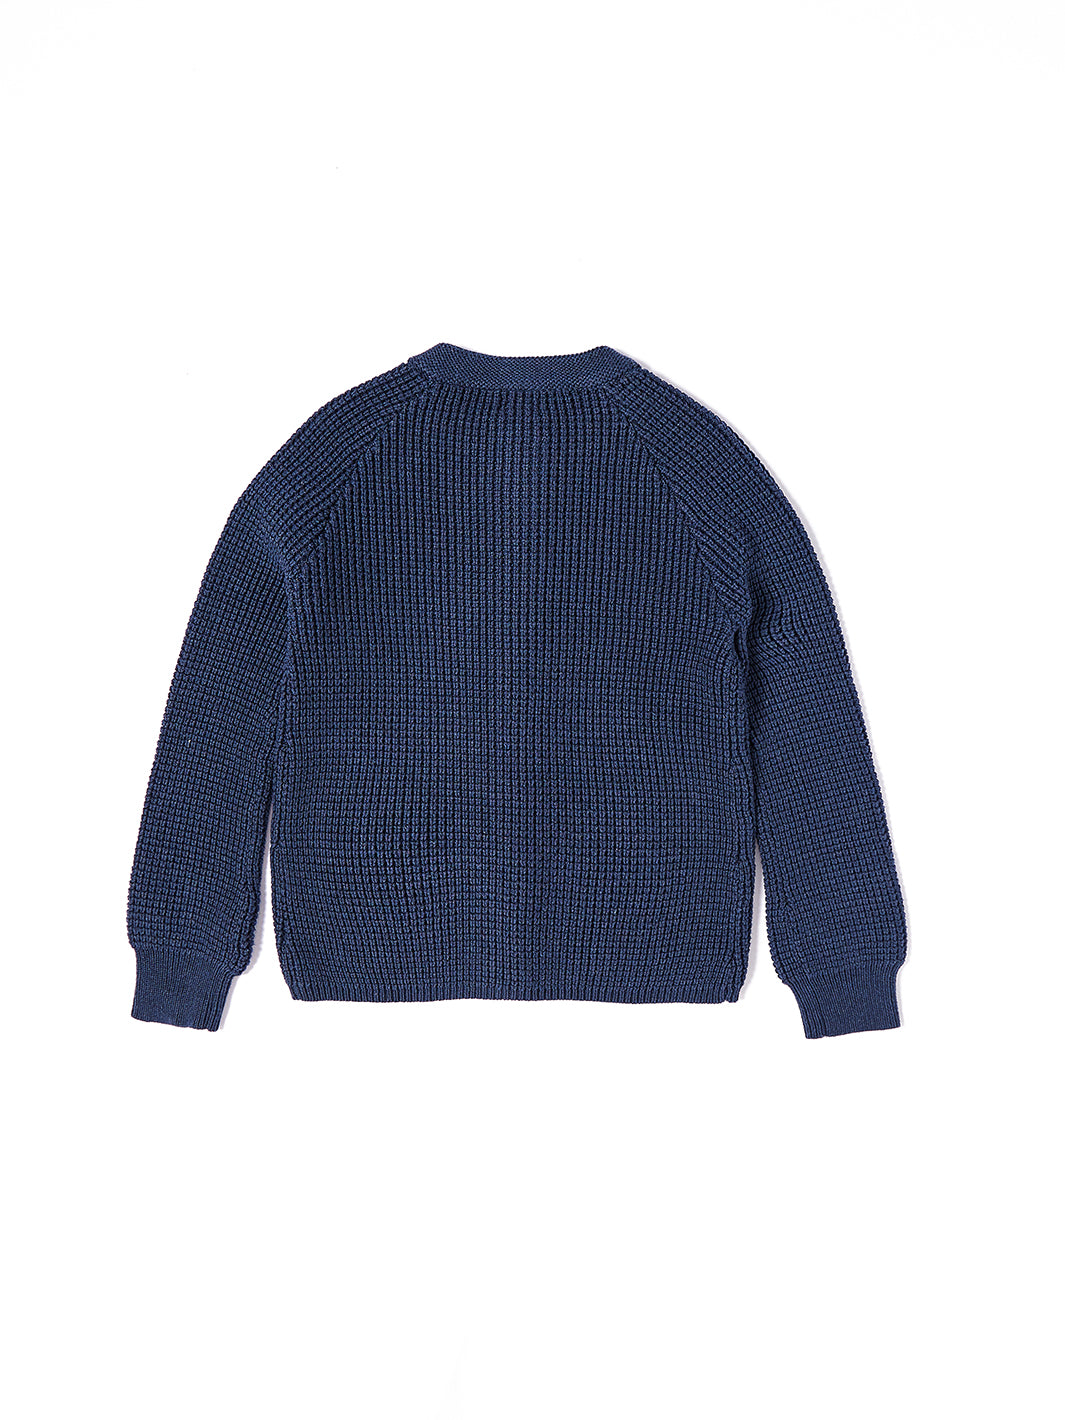 Cardigan Heavy Crochet Sweater - Navy mix